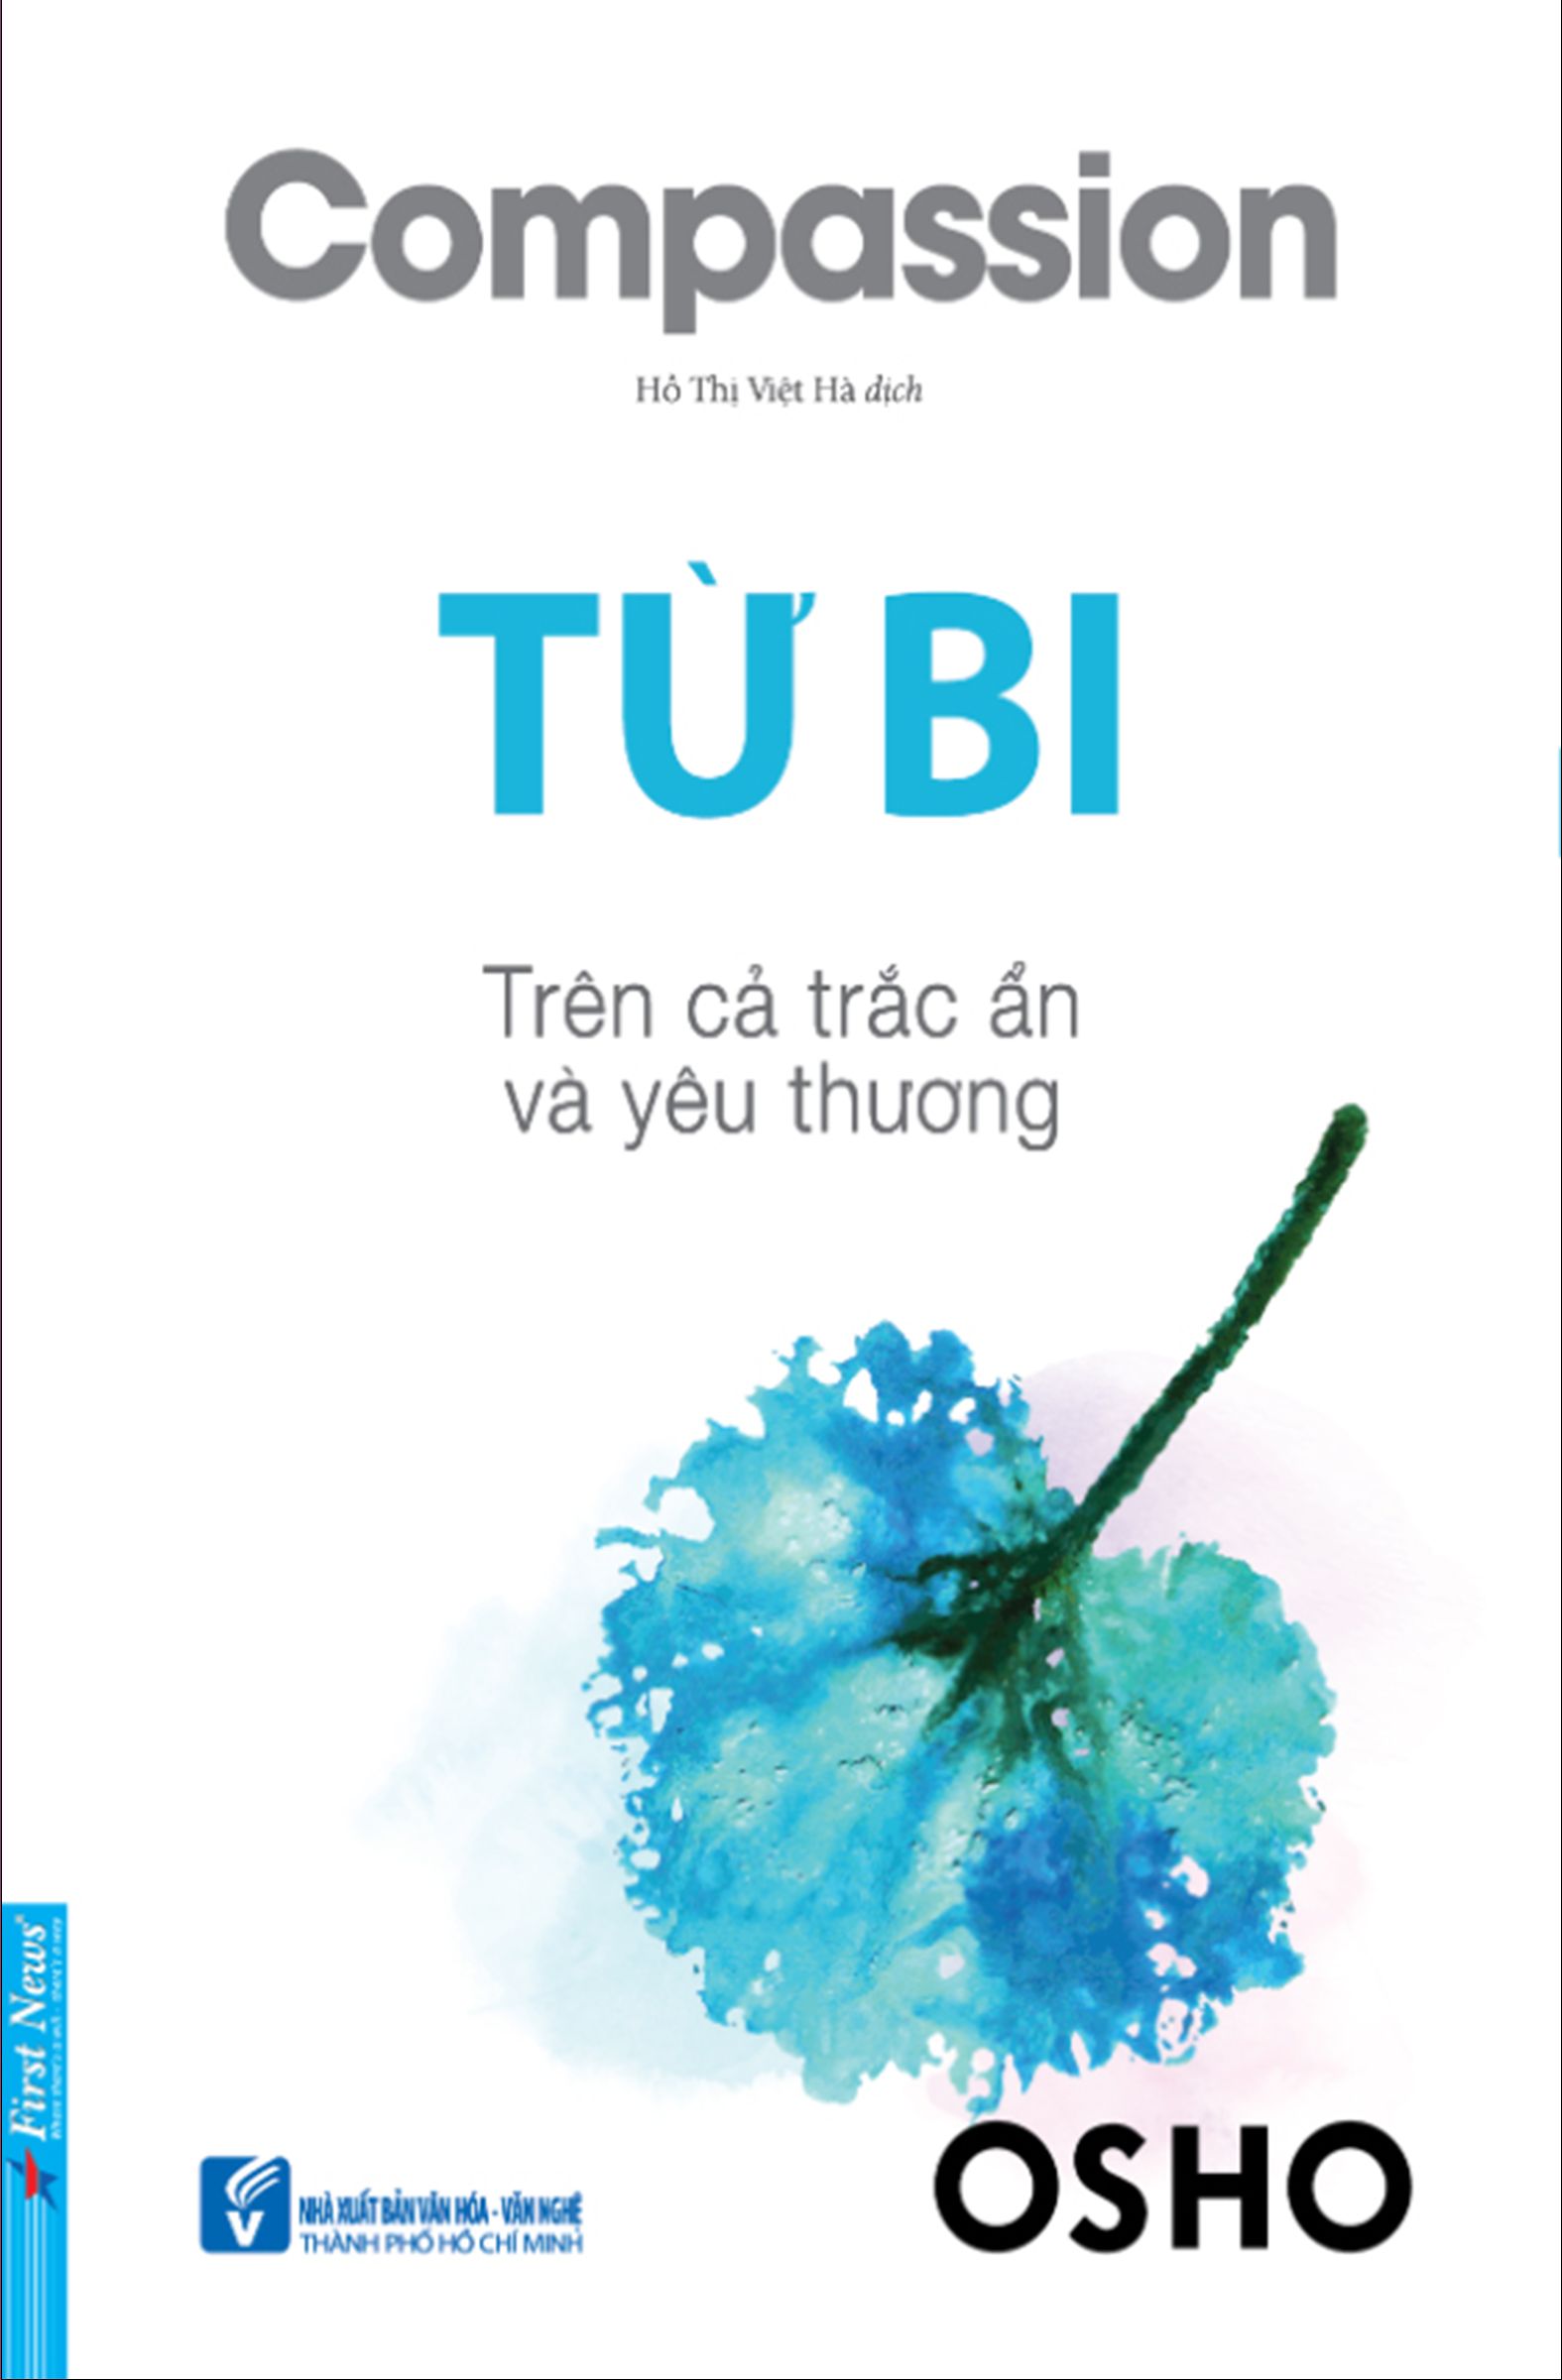 tubi-cover-01-bia-1-1024x768.png